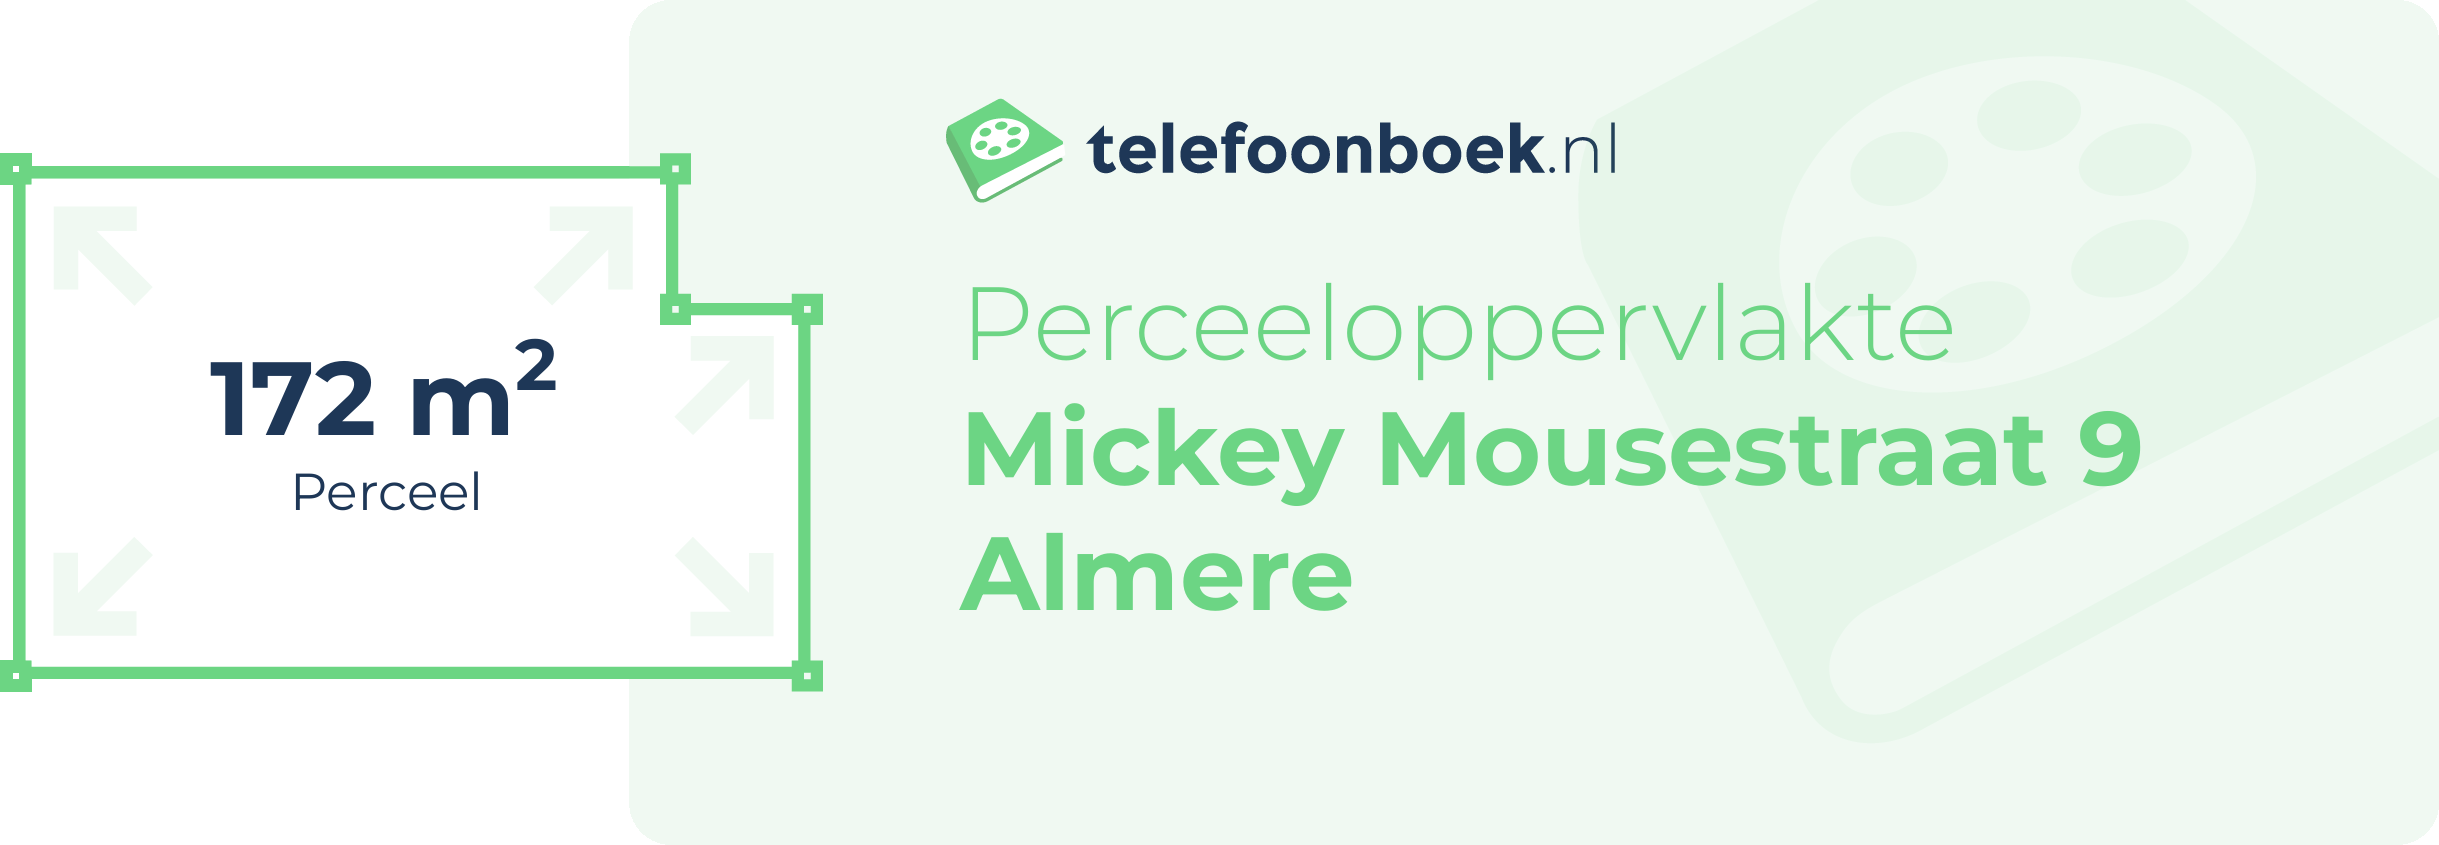 Perceeloppervlakte Mickey Mousestraat 9 Almere